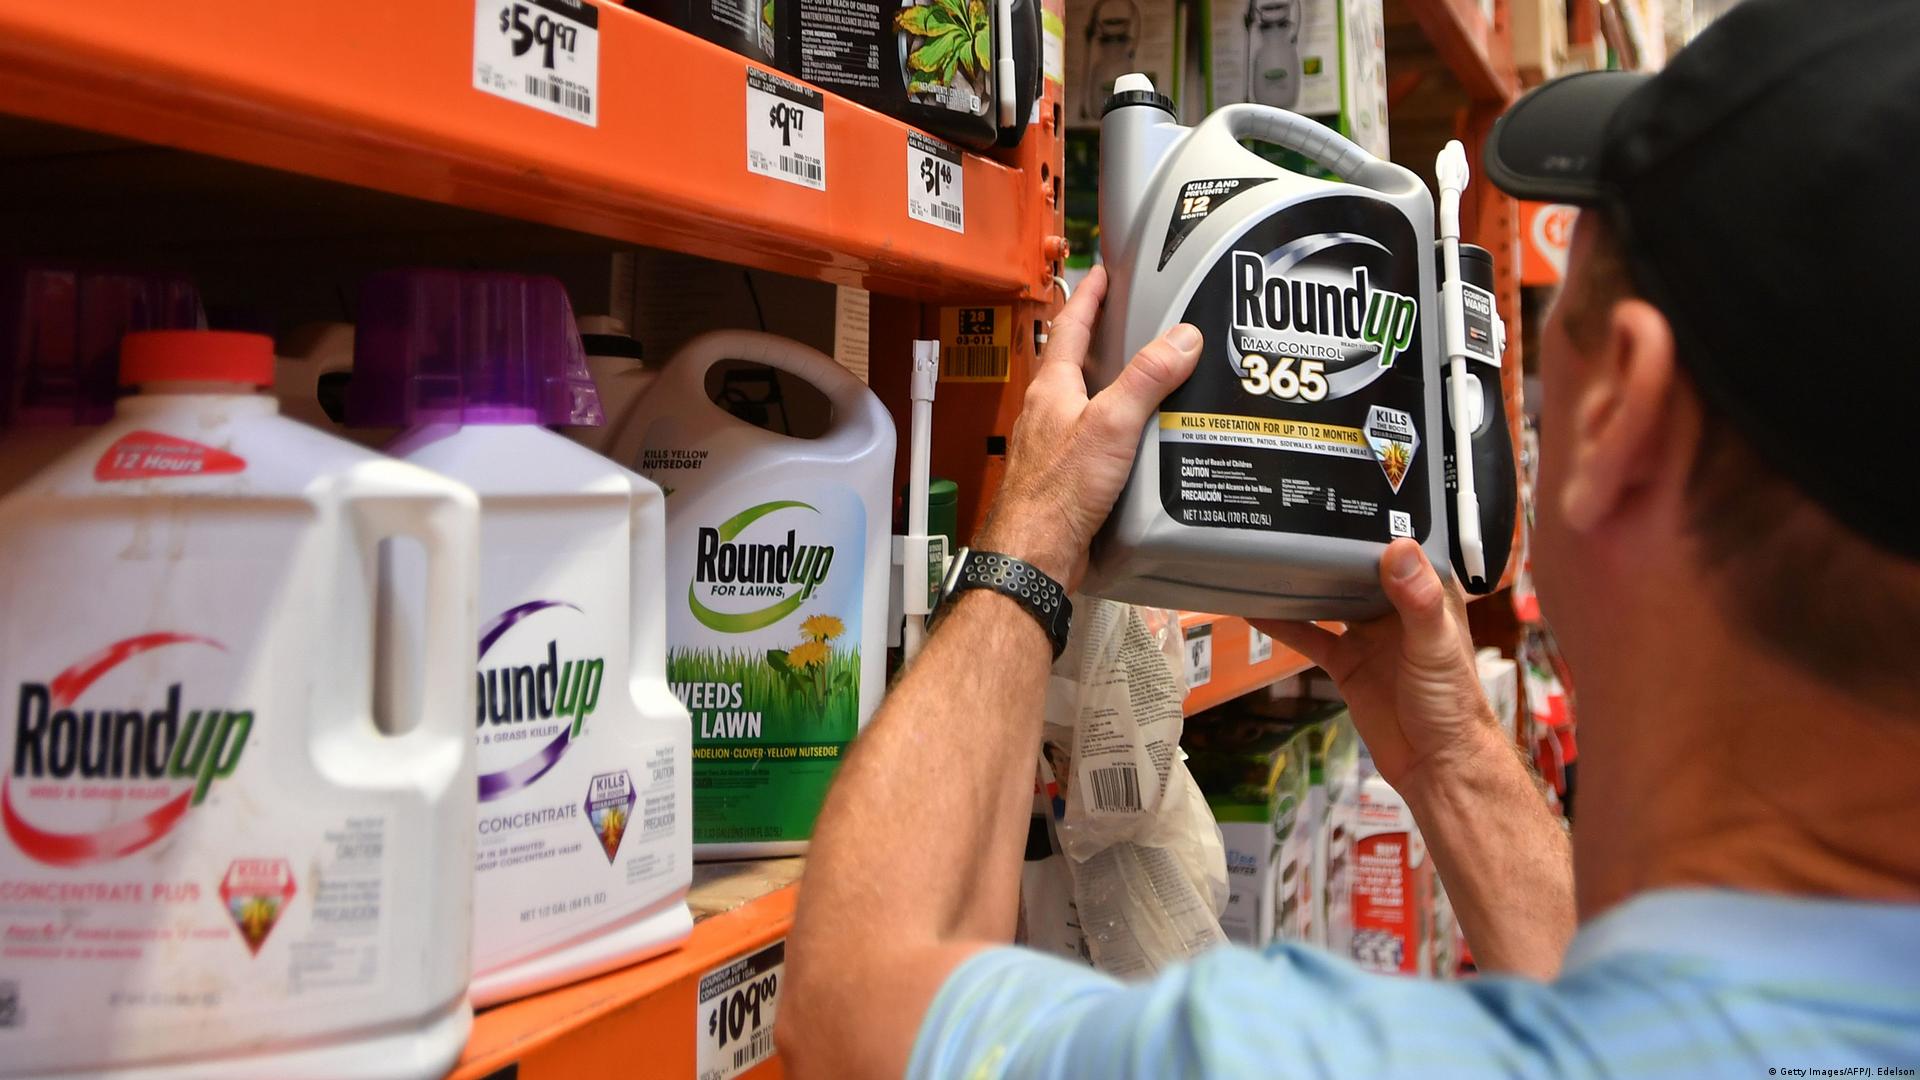 Bayer to settle Monsanto false labeling lawsuit – DW – 03/31/2020